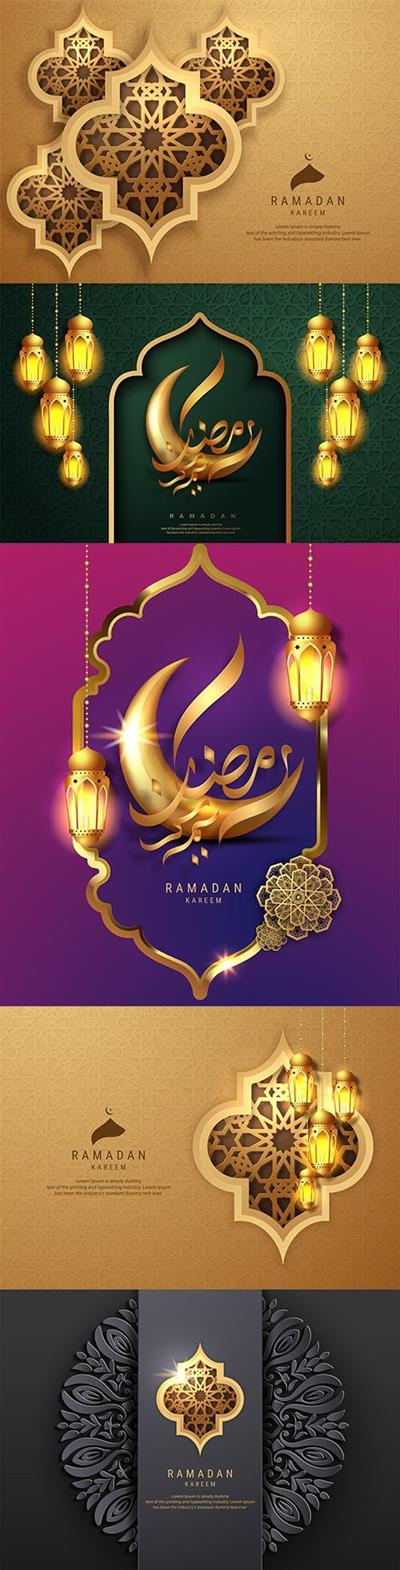 Ramadan Kareem Arab calligraphy design illustrations 20